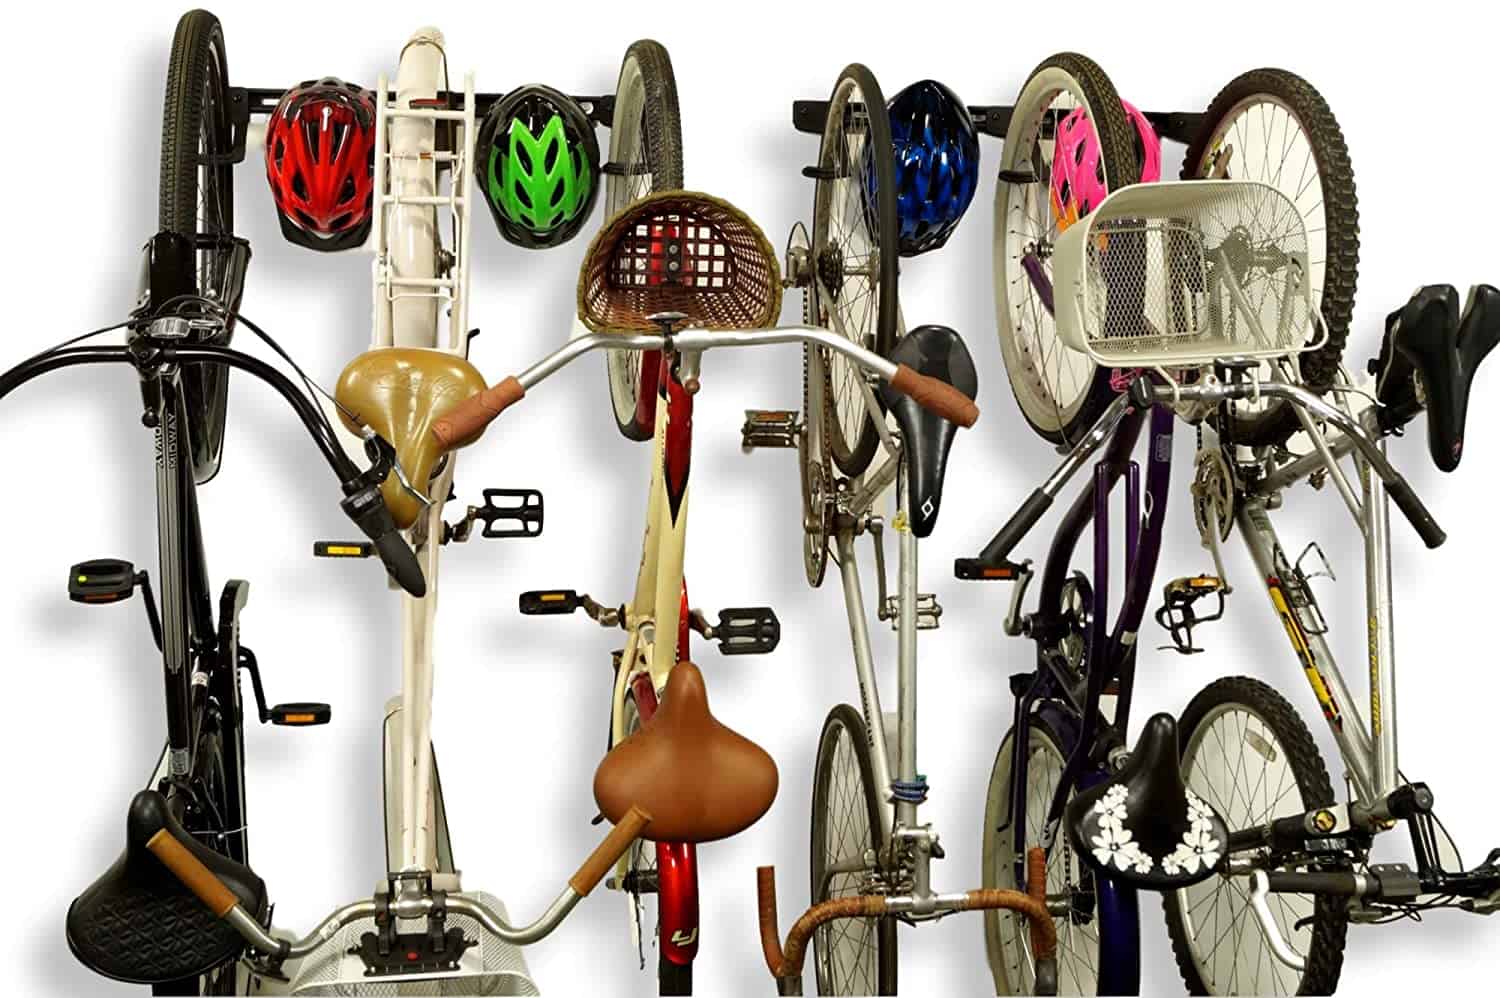 Best Storage Wall Mount for Multiple Bikes: Koova Wall Mount Bike Storage Rack